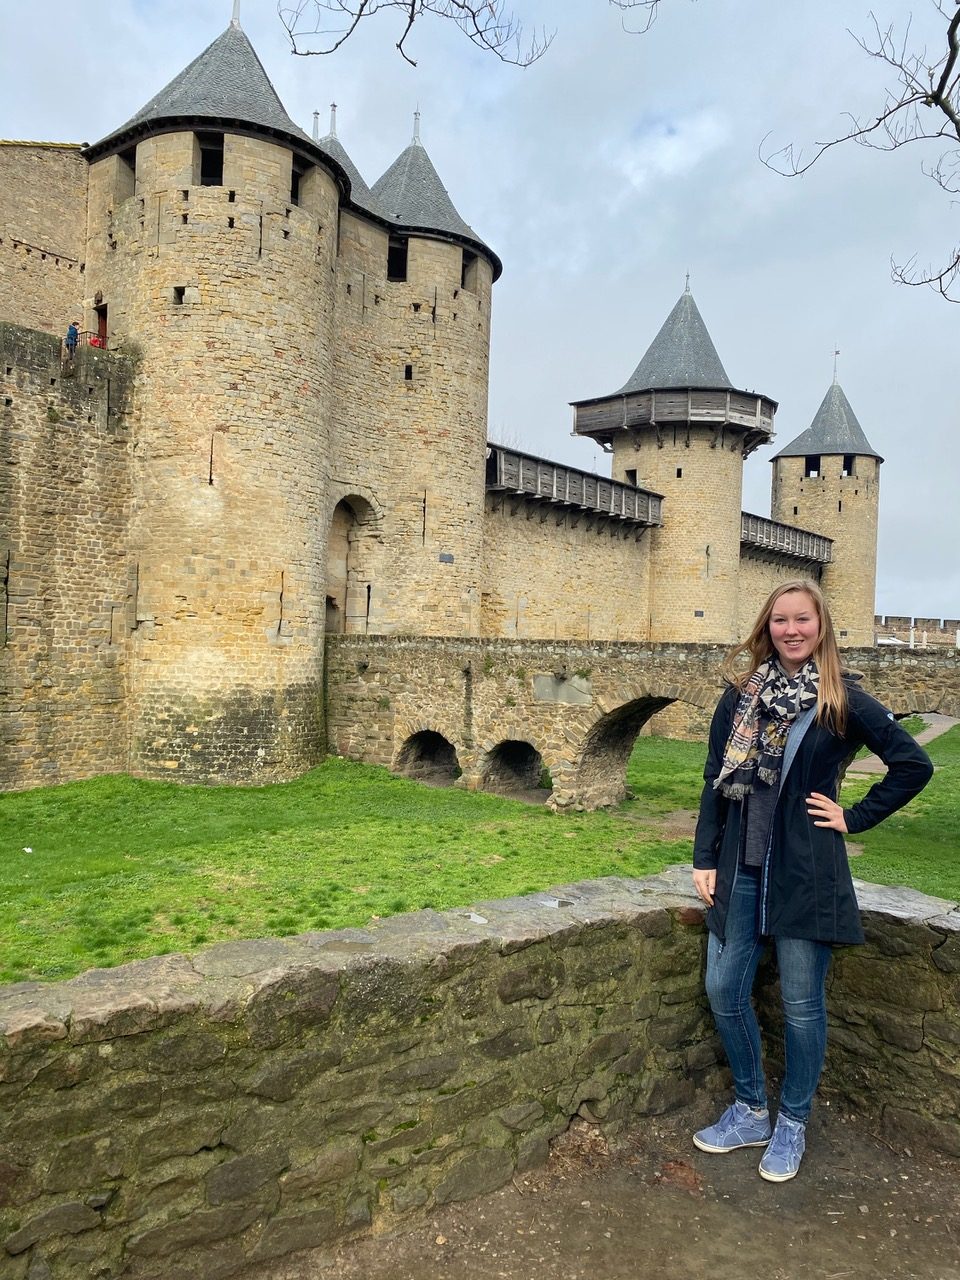 The entrance to Carcassonne Castle